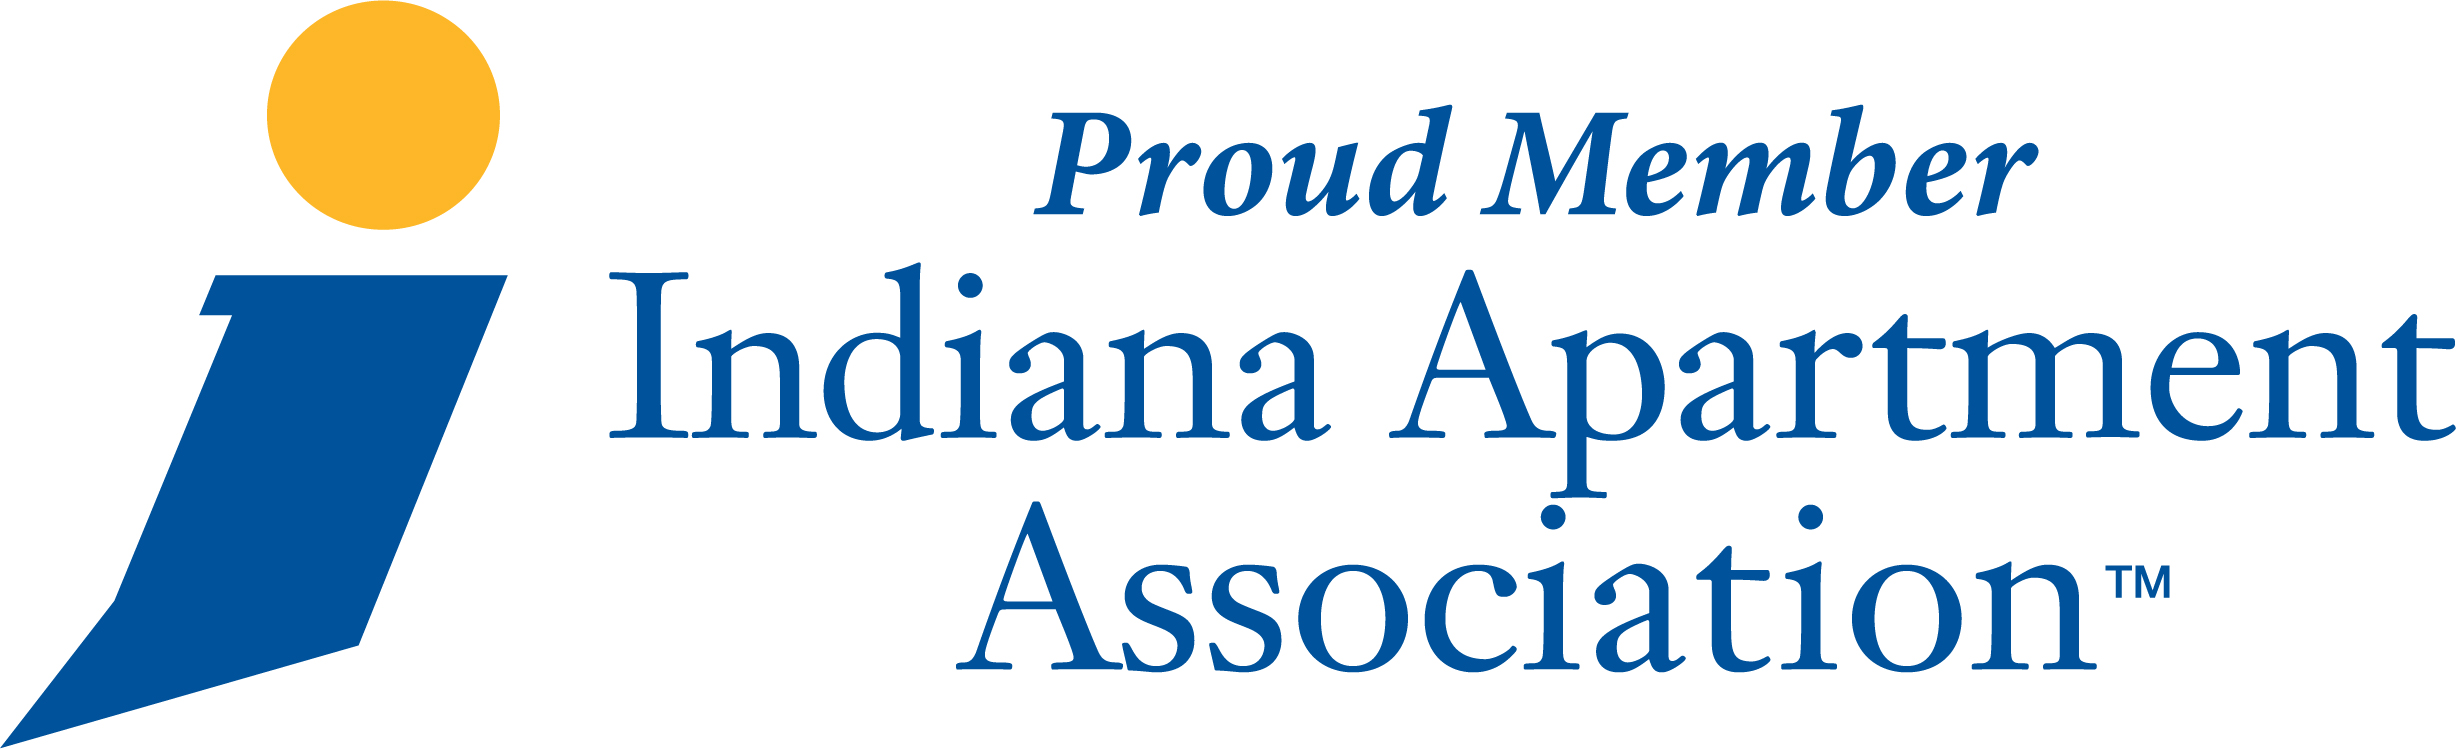 Indiana Apartment Association logo